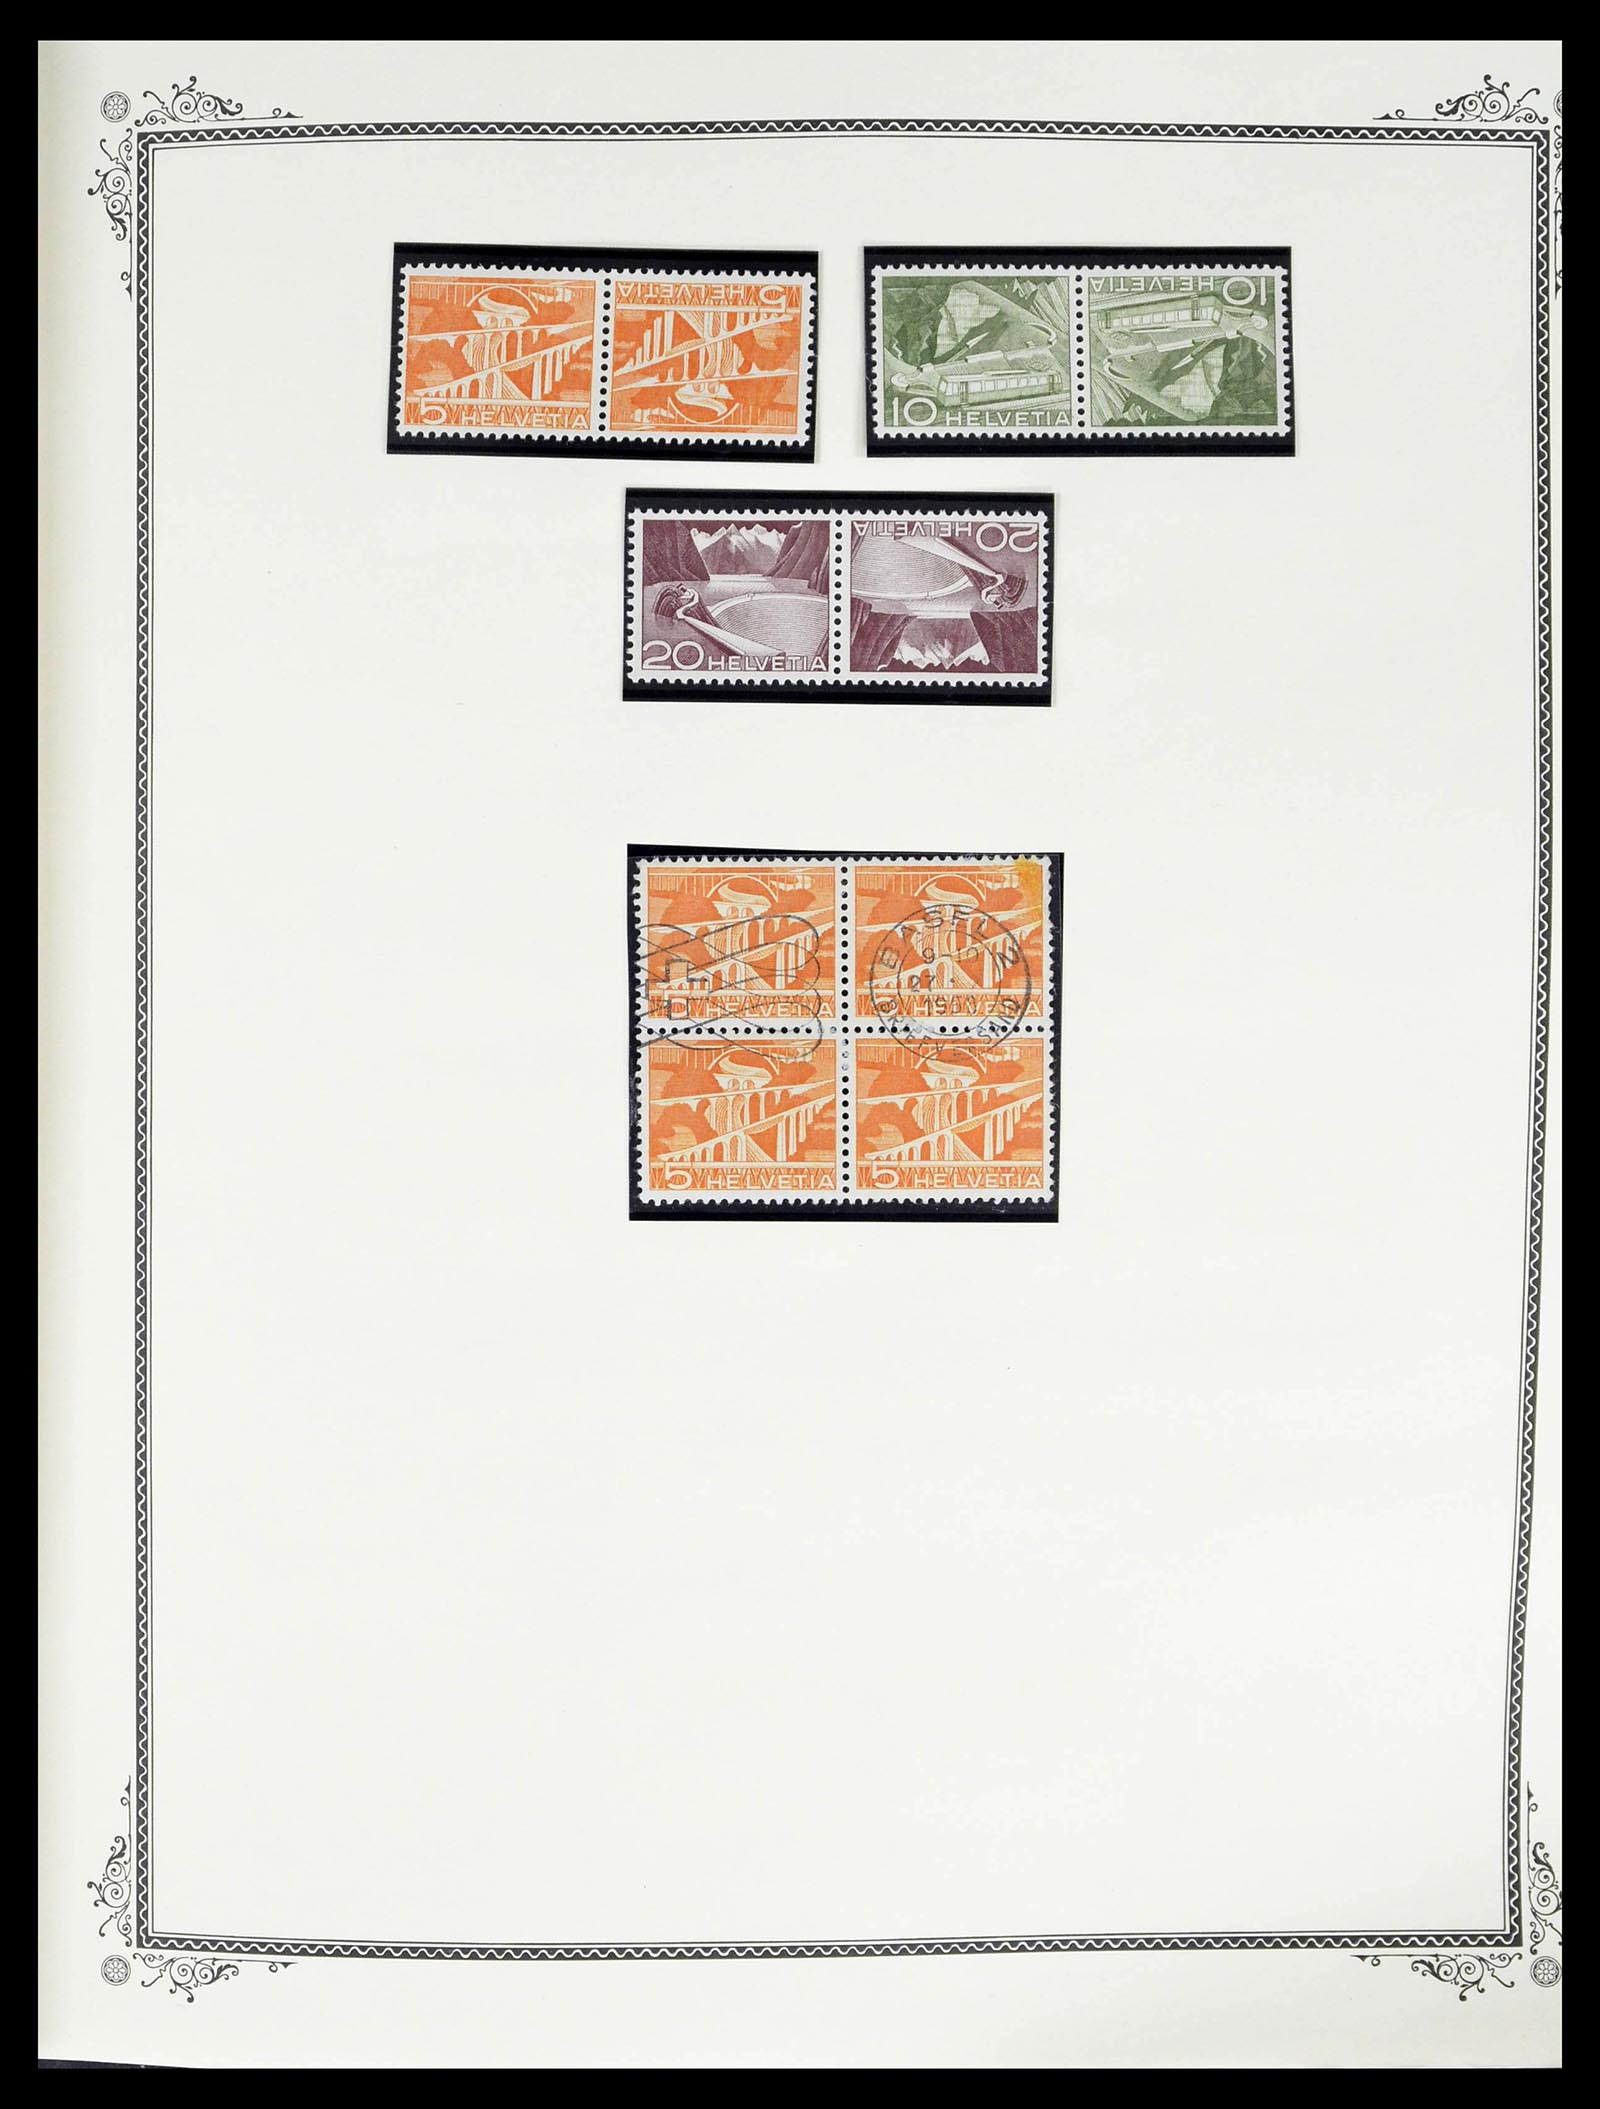 39178 0038 - Stamp collection 39178 Switzerland 1850-1989.